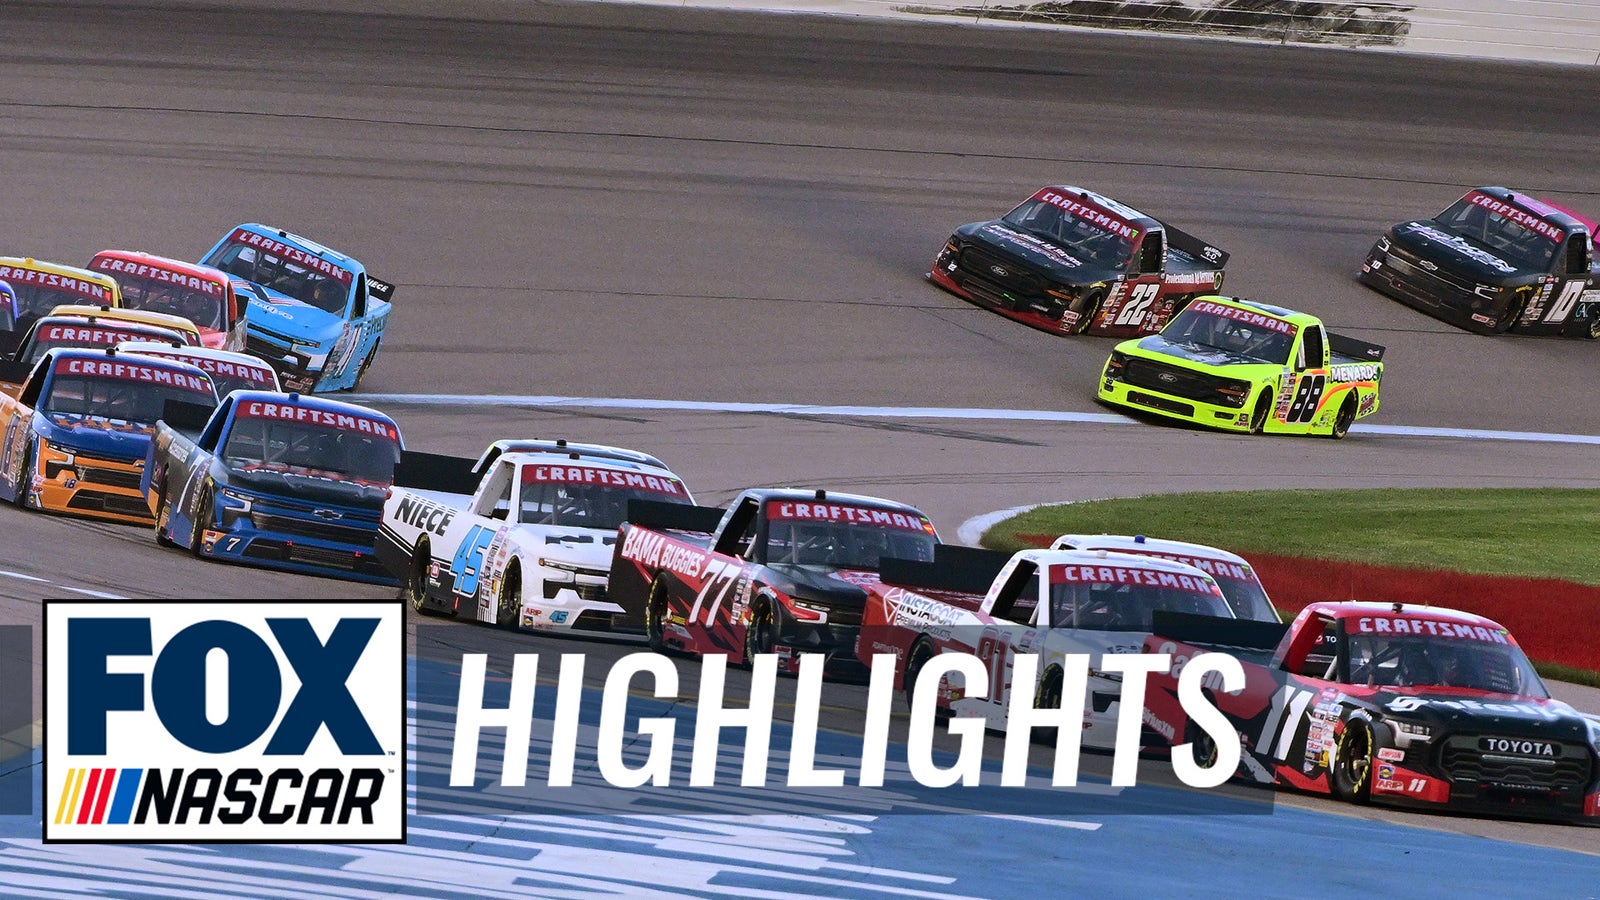 NASCAR Craftsman Truck Series: Heart of America 200 Highlights | NASCAR on FOX